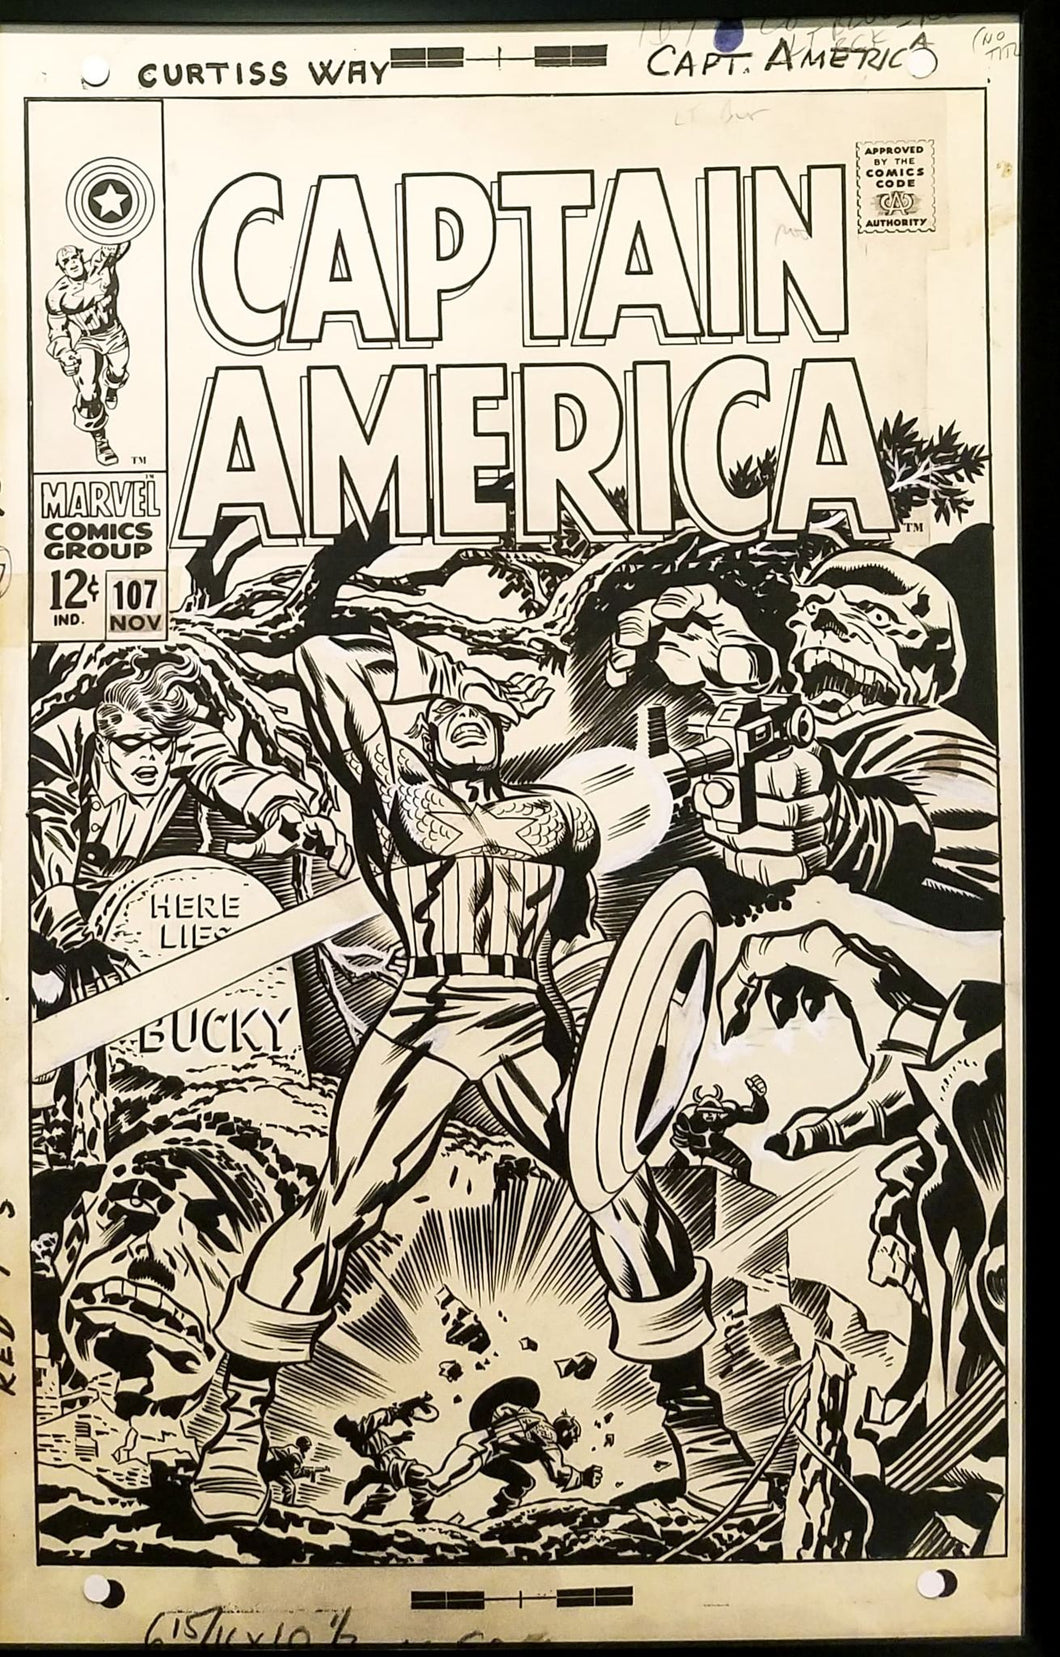 Captain America #107 by Jack Kirby 11x17 FRAMED Original Art Poster Marvel Comics